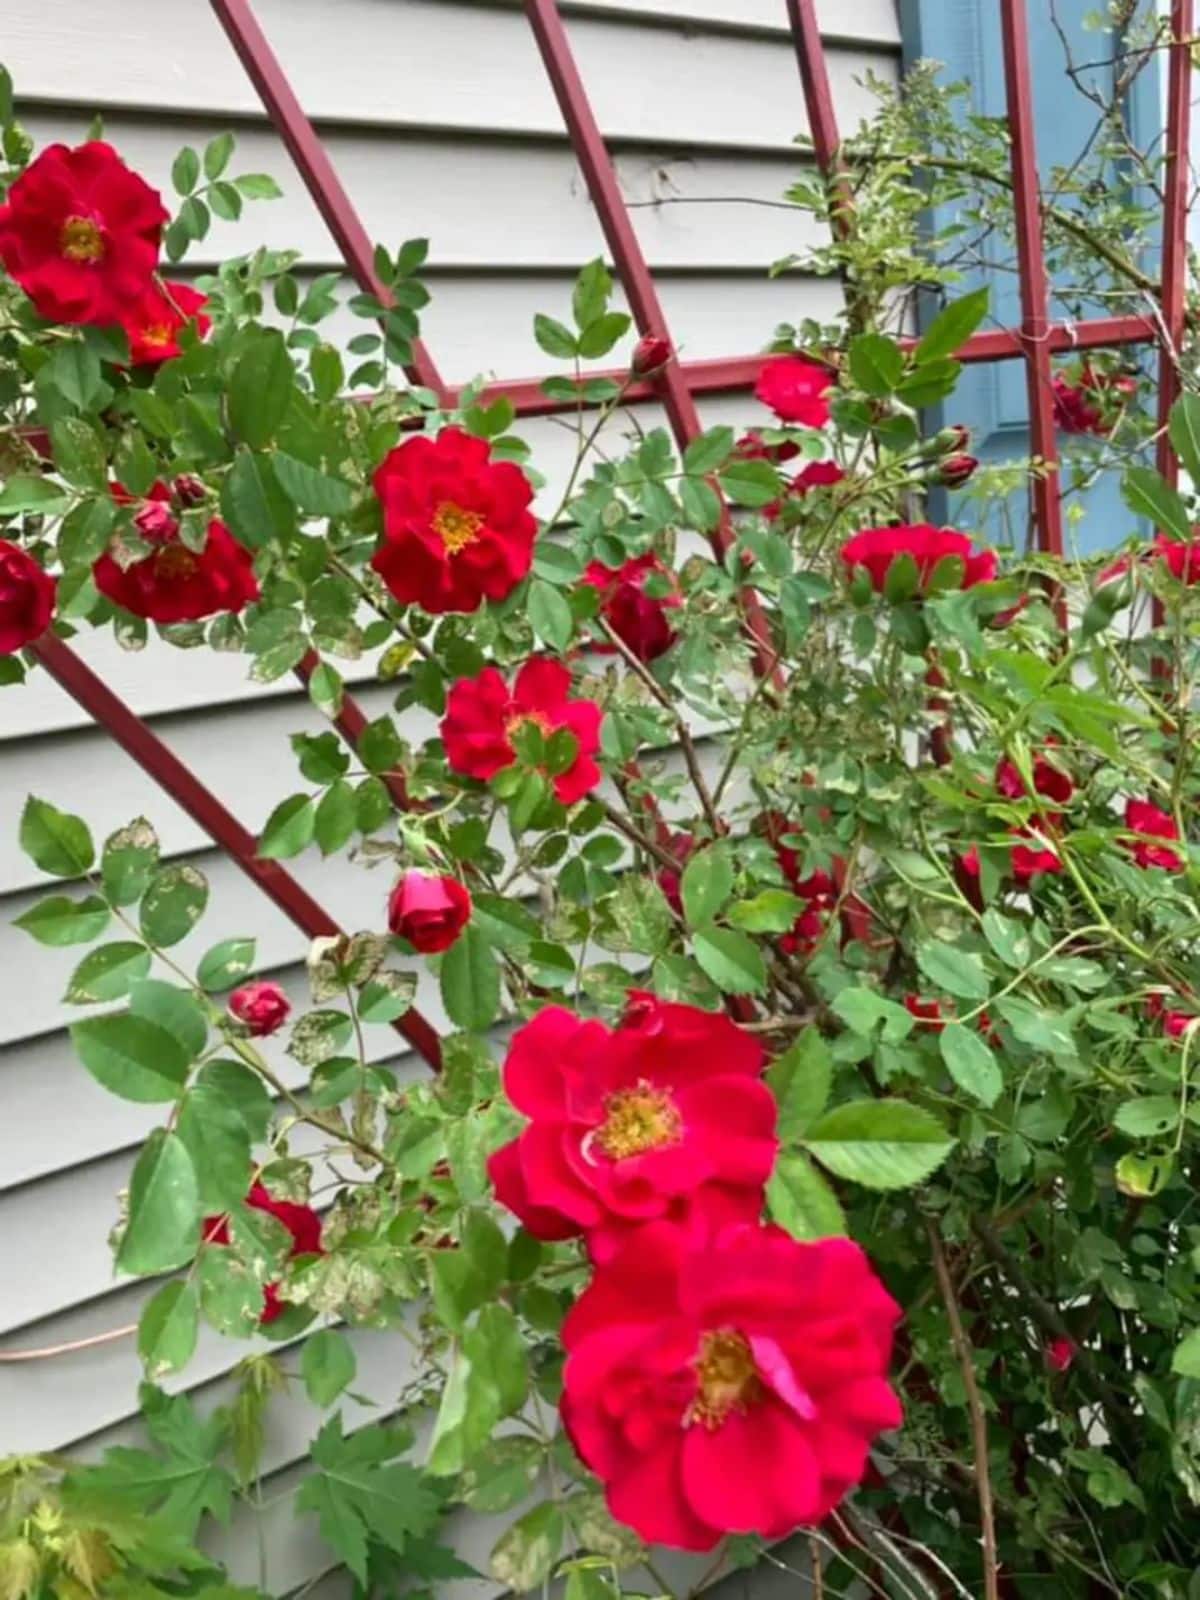 Thriving roses in balanced soil